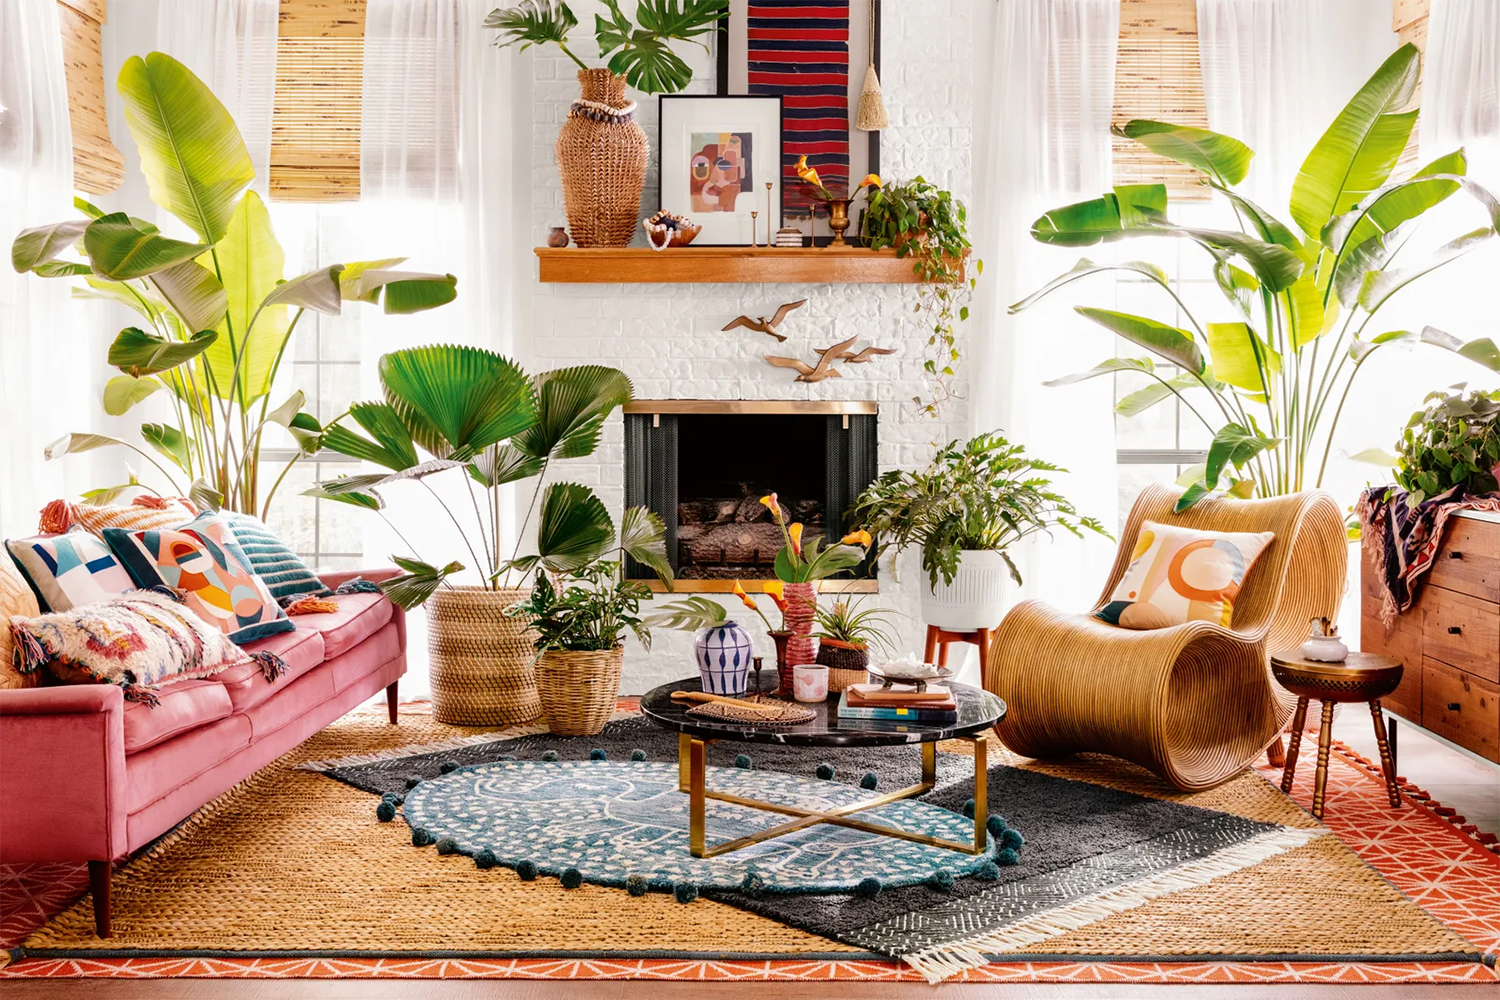 Bohemian-inspired home decor ideas